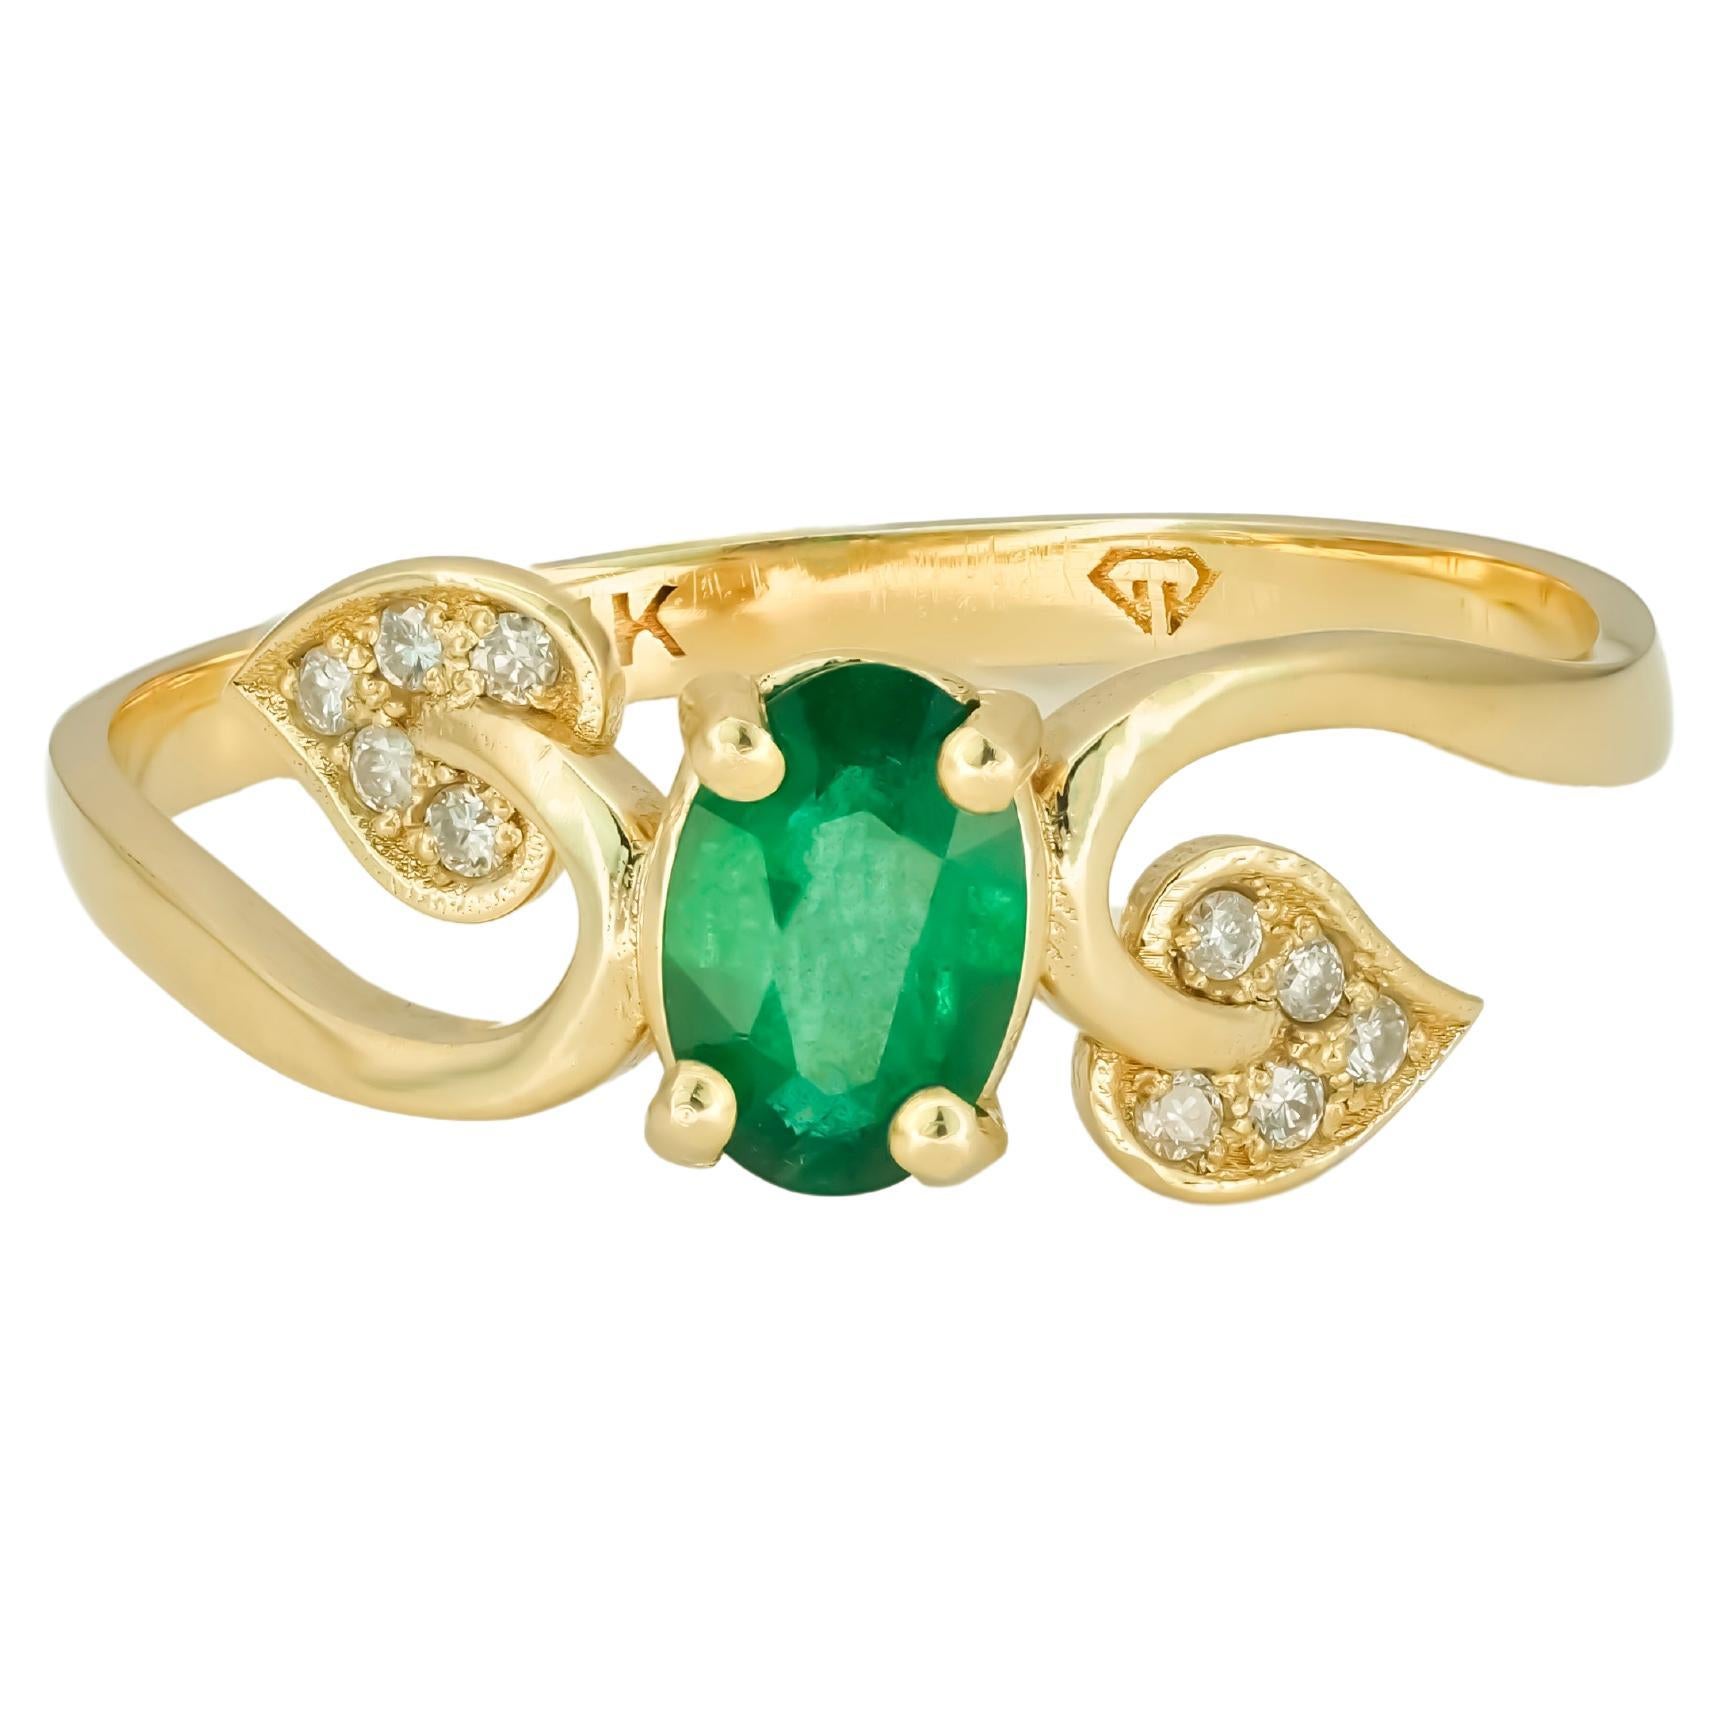 Genuine emerald 14k gold ring. 